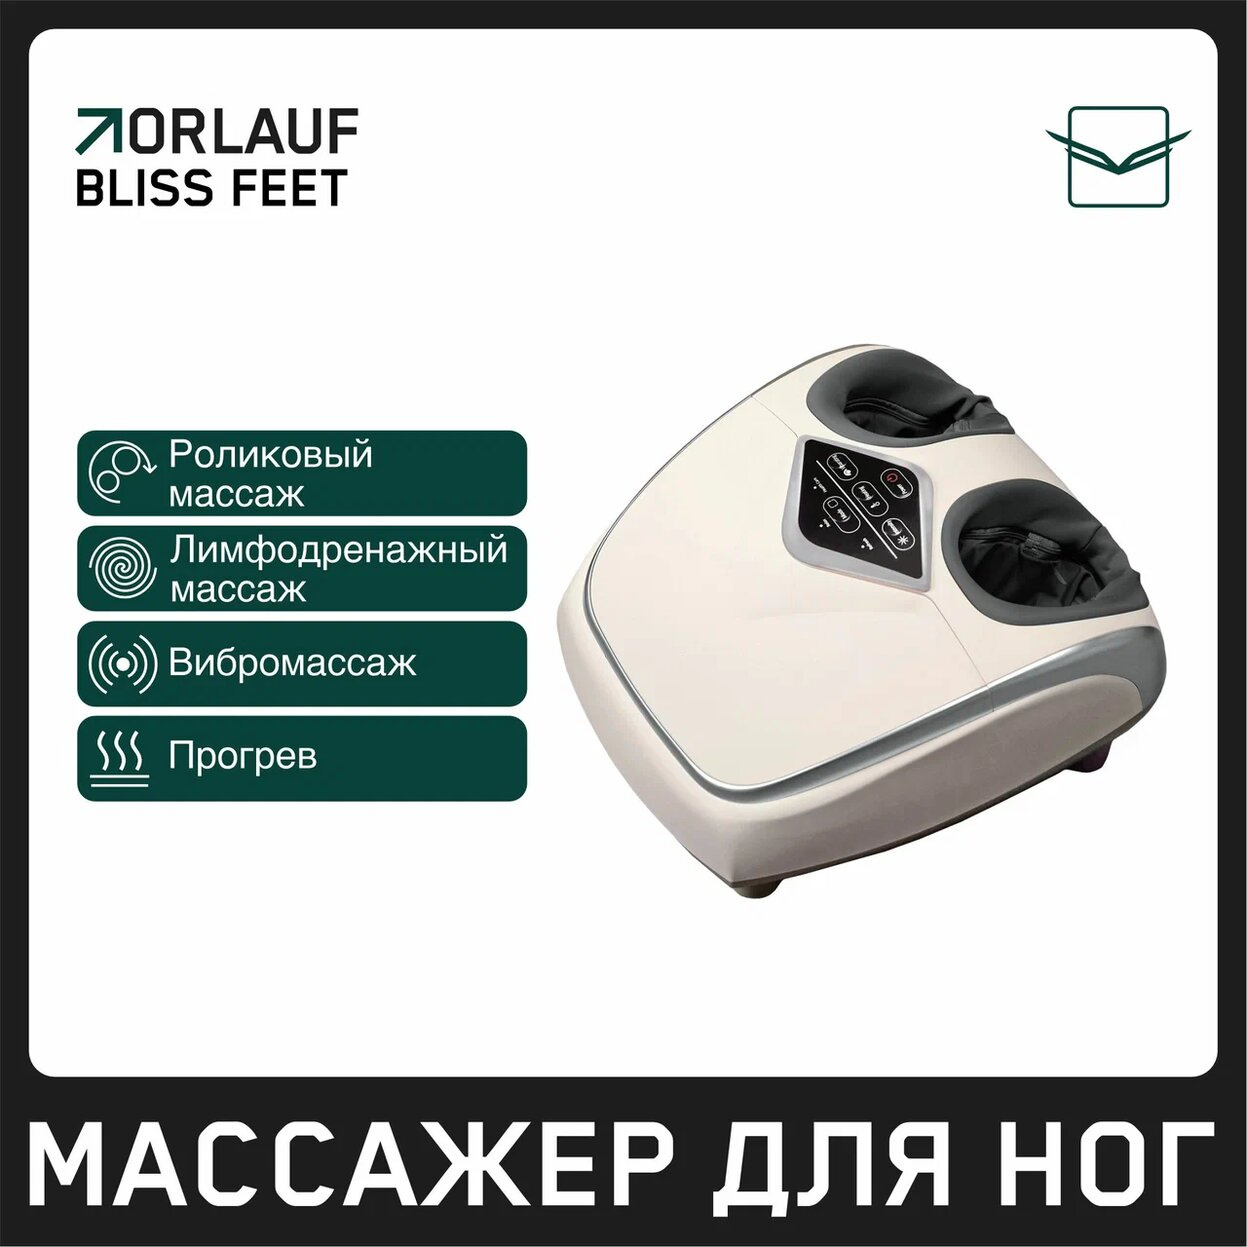 Orlauf Bliss Feet из каталога массажеров в Казани по цене 27600 ₽